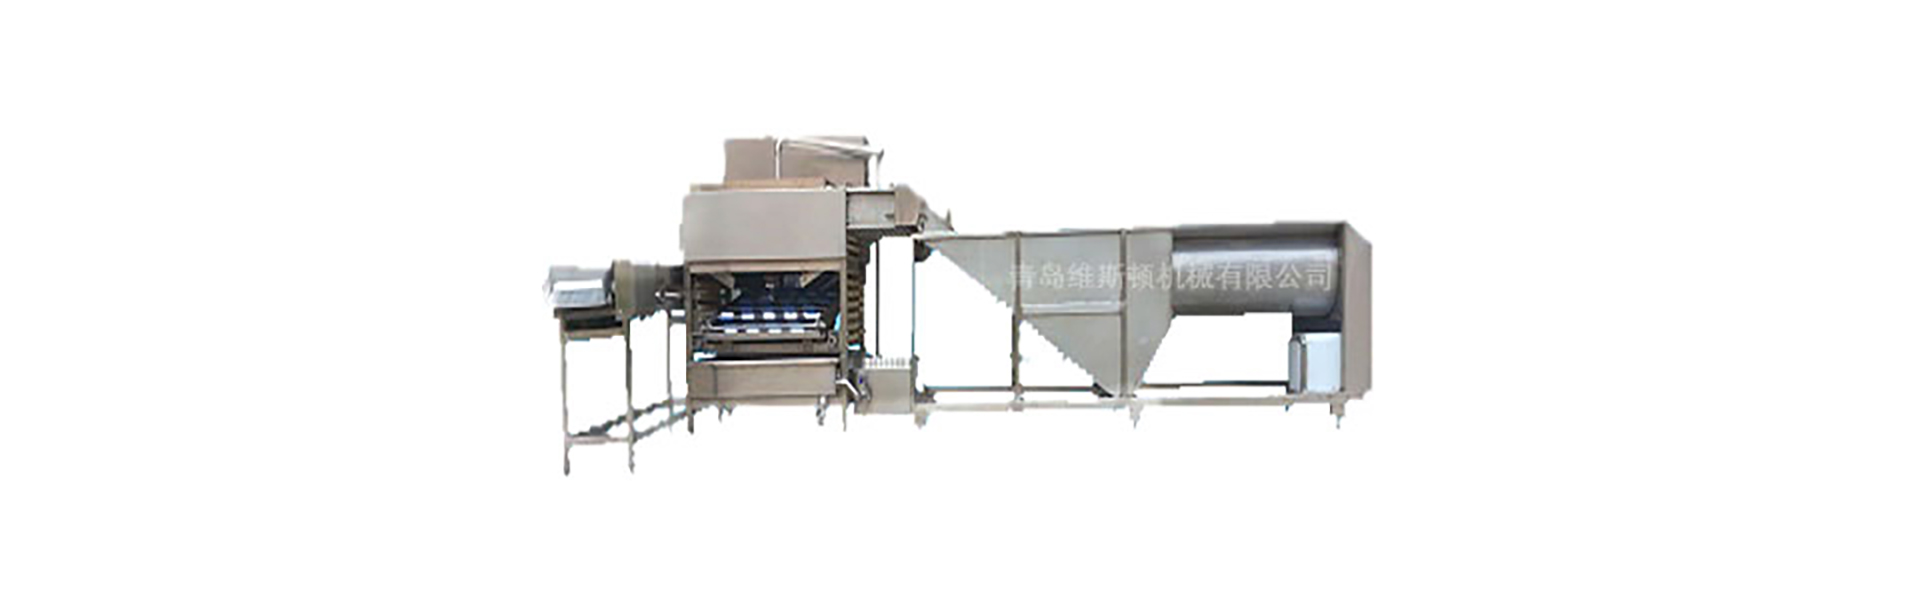 egg breaking machine,egg washing machine,egg grading machine,Qingdao Wisdom Machinery Co.,Ltd